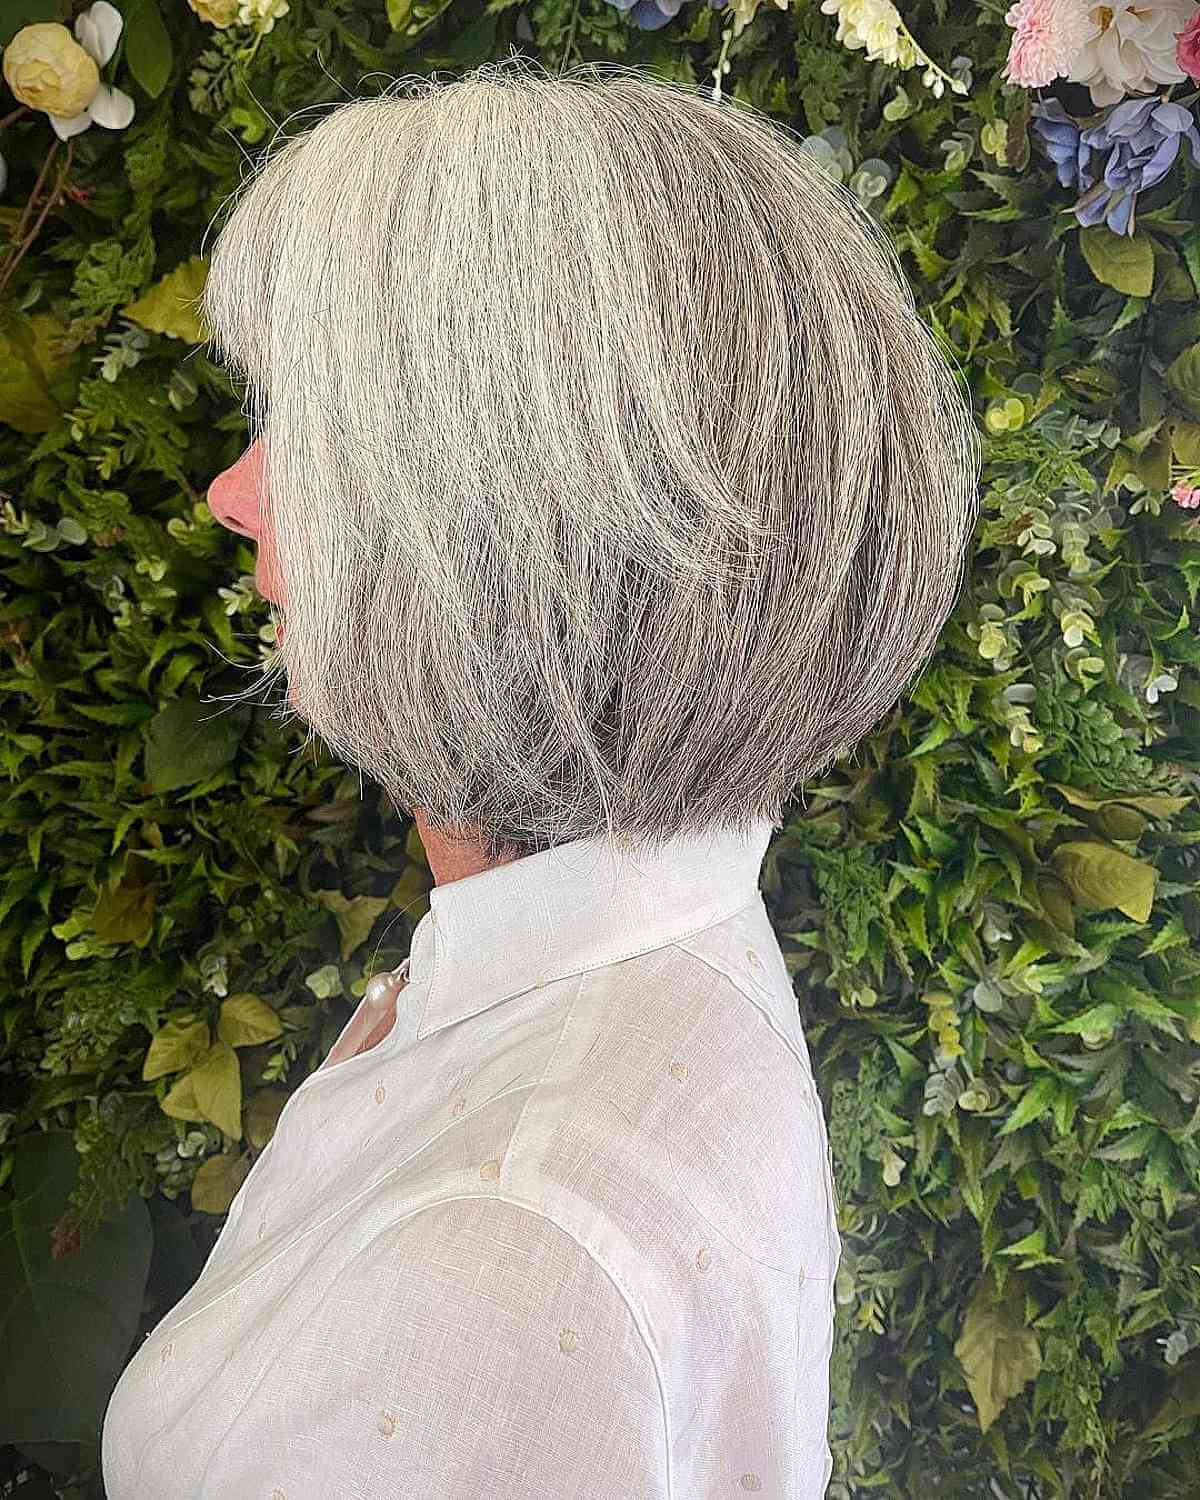 Wedge haircut on gray hair